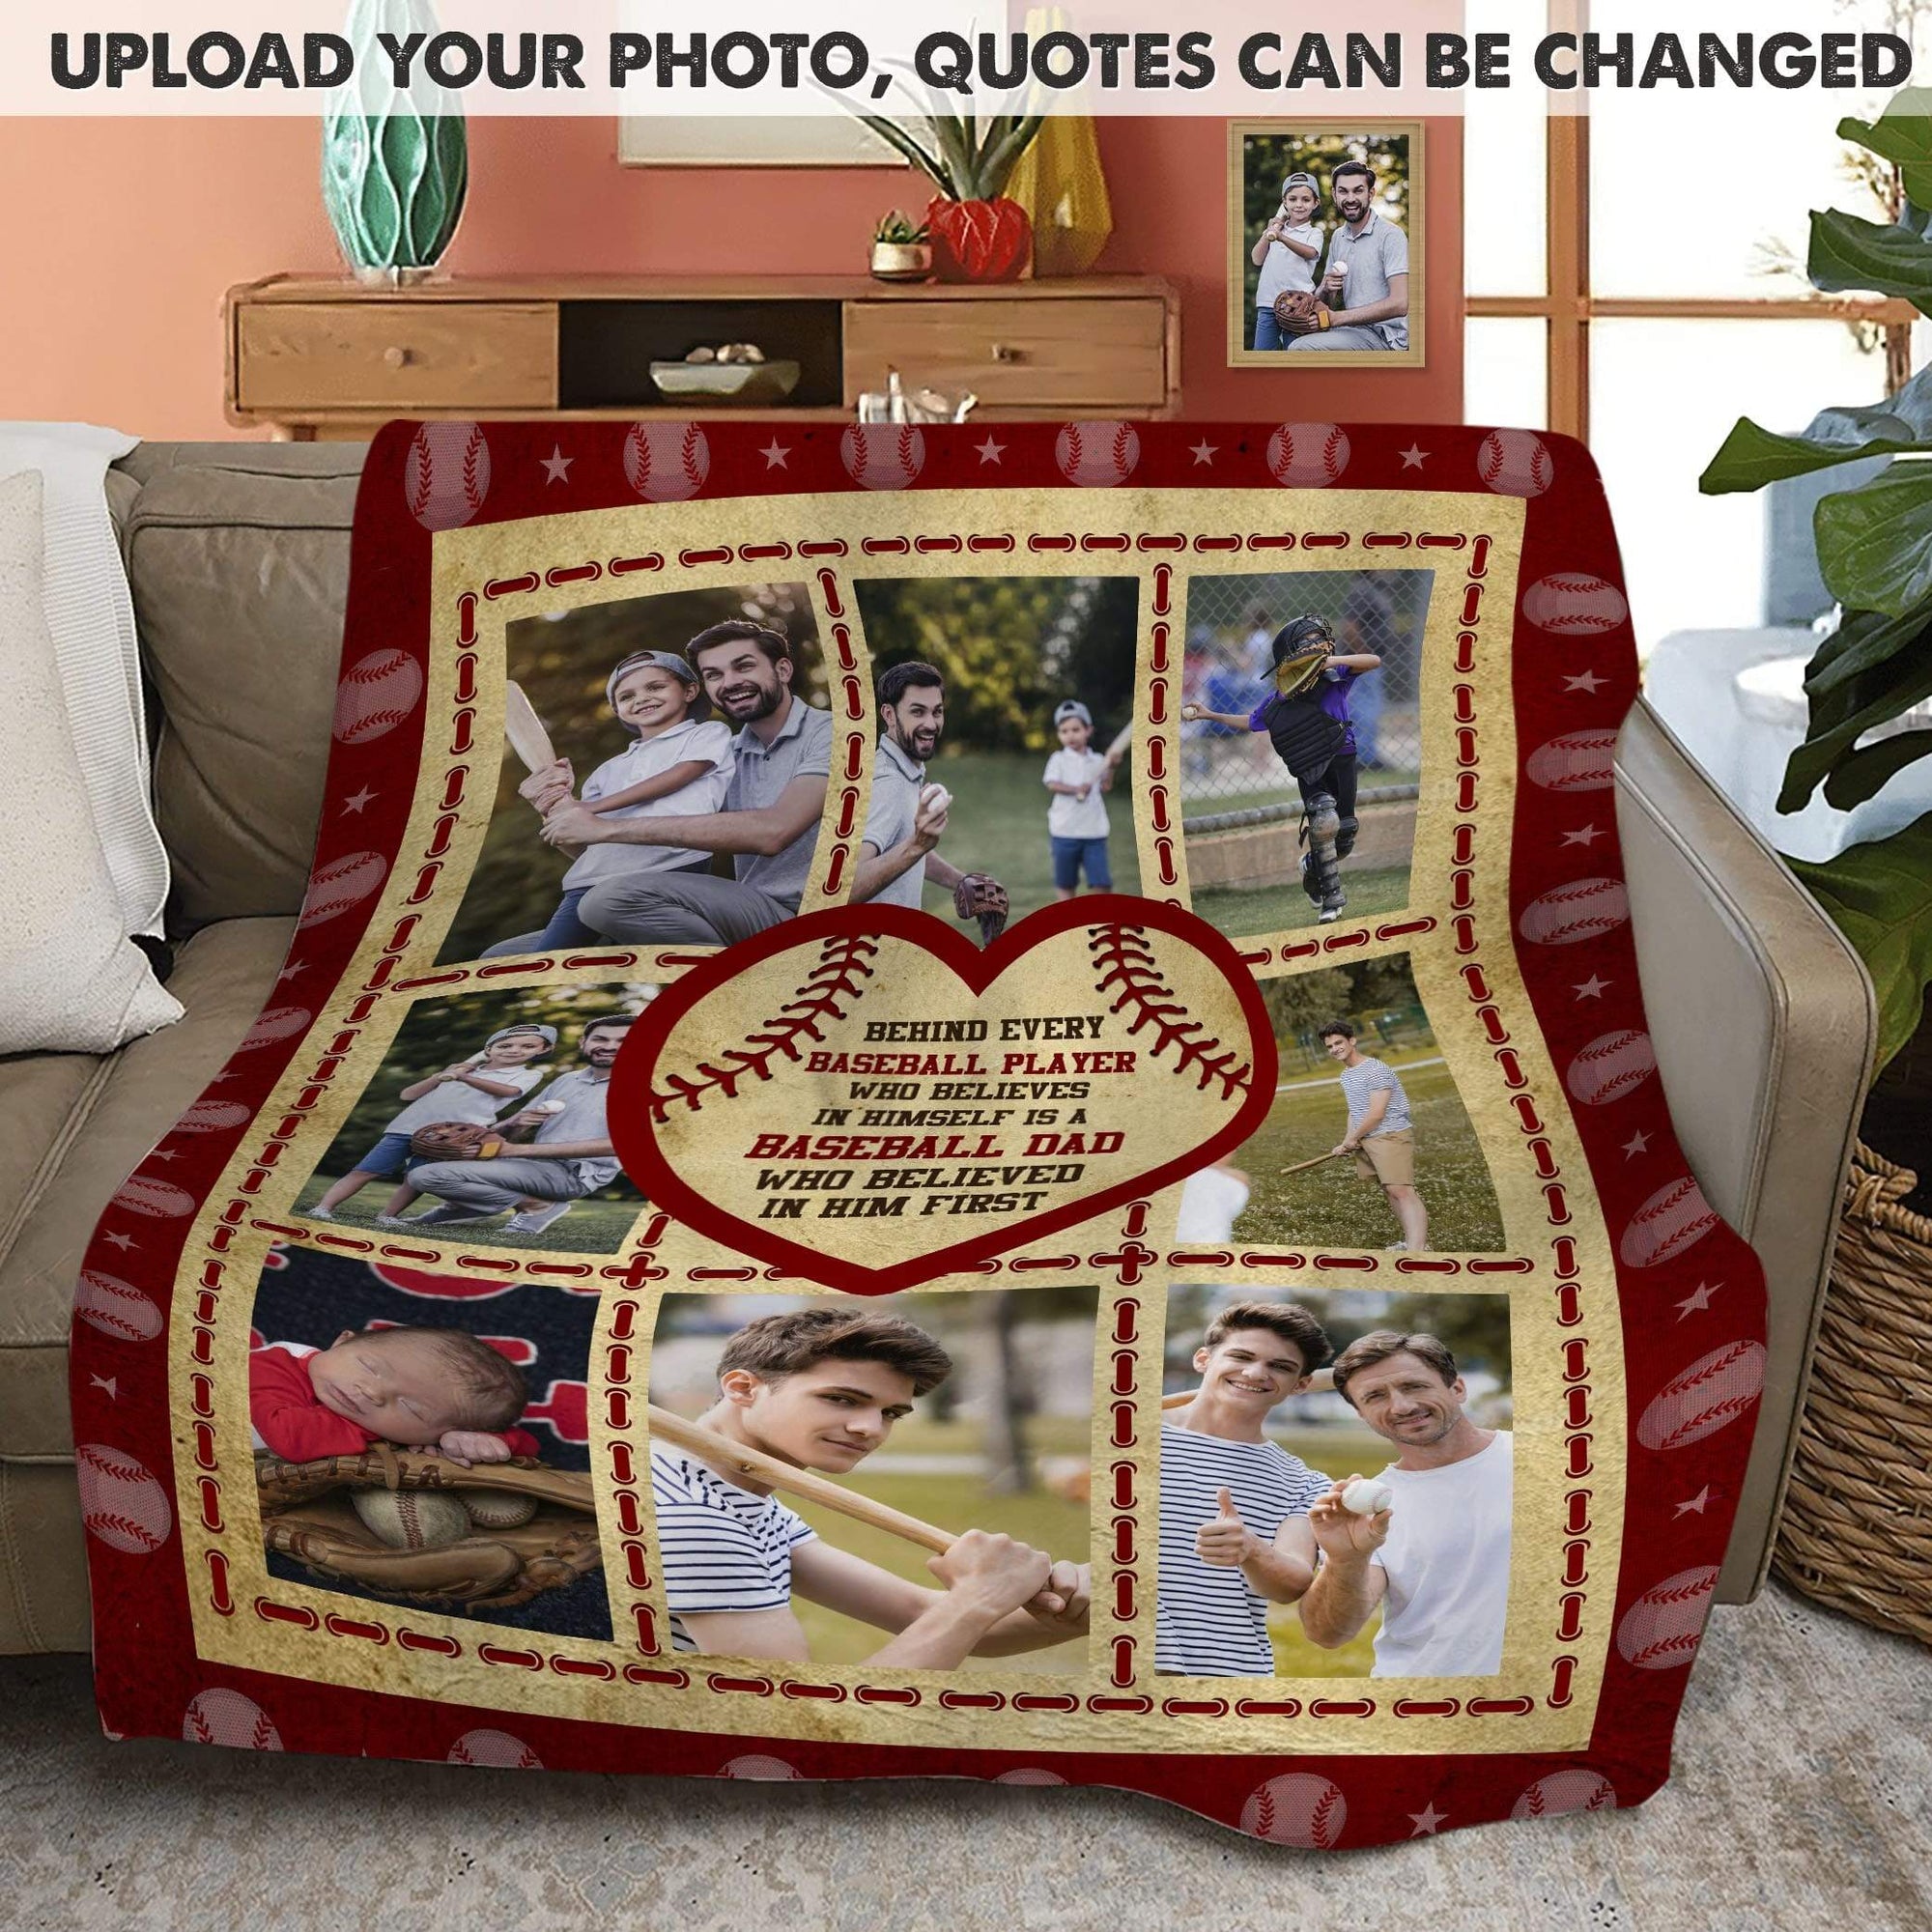 GeckoCustom Upload Photo Inspirational Quotes Baseball Blanket HN590 VPS Cozy Plush Fleece 30 x 40 Inches (baby size)